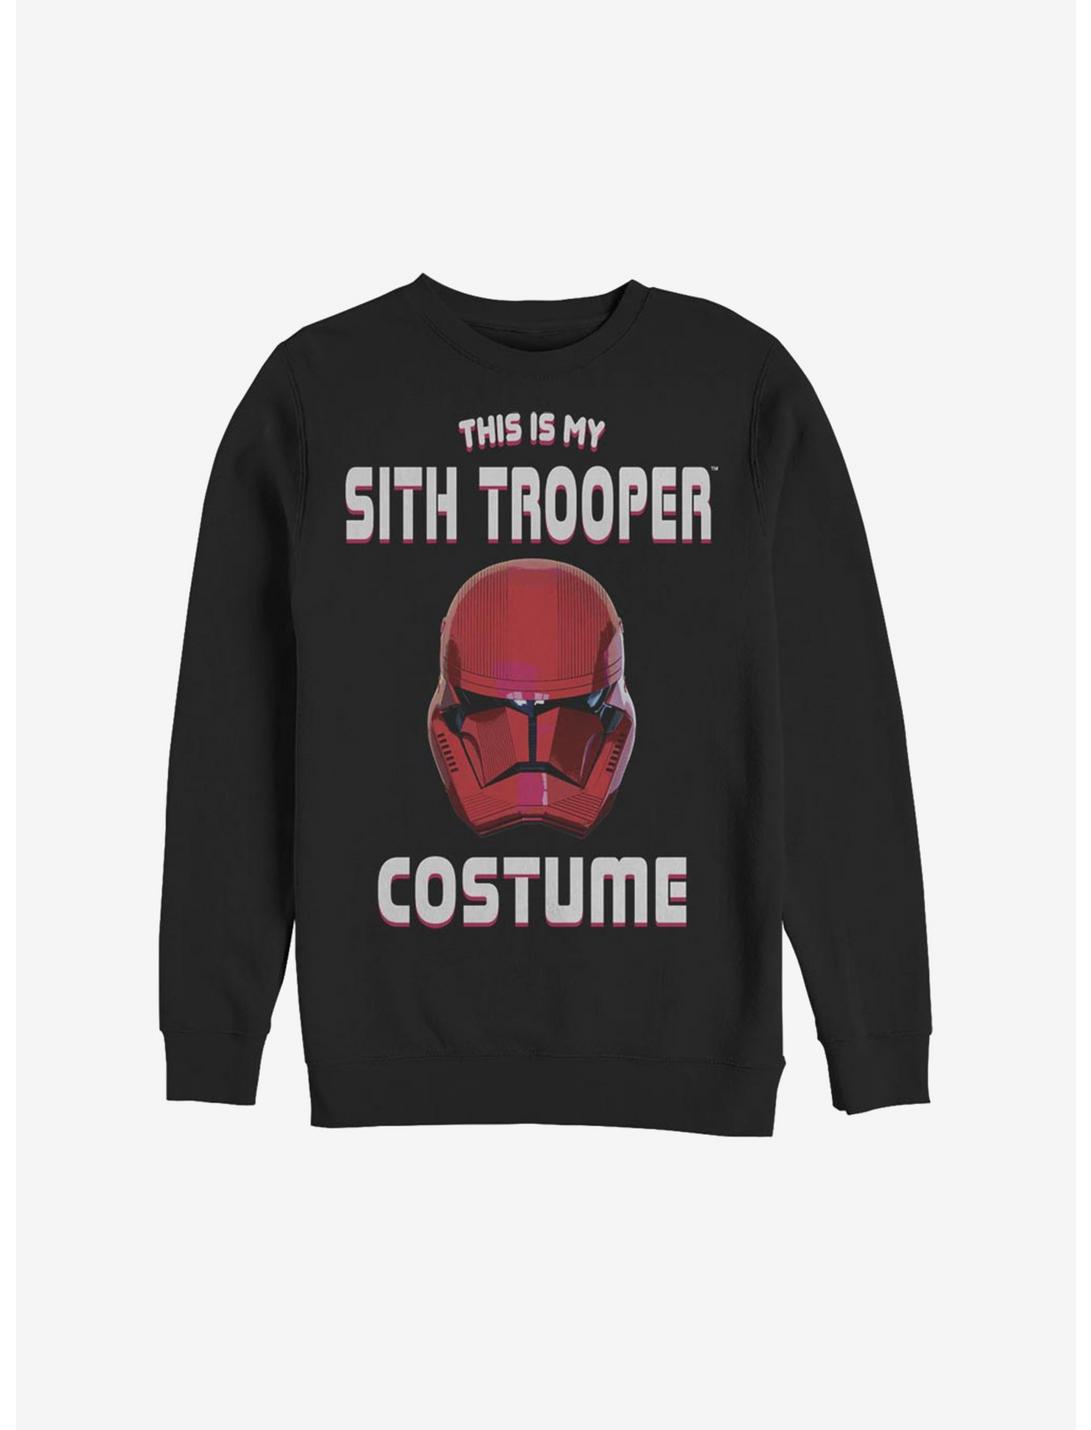 Star Wars Episode IX The Rise Of Skywalker Sith Trooper Costume Sweatshirt, BLACK, hi-res